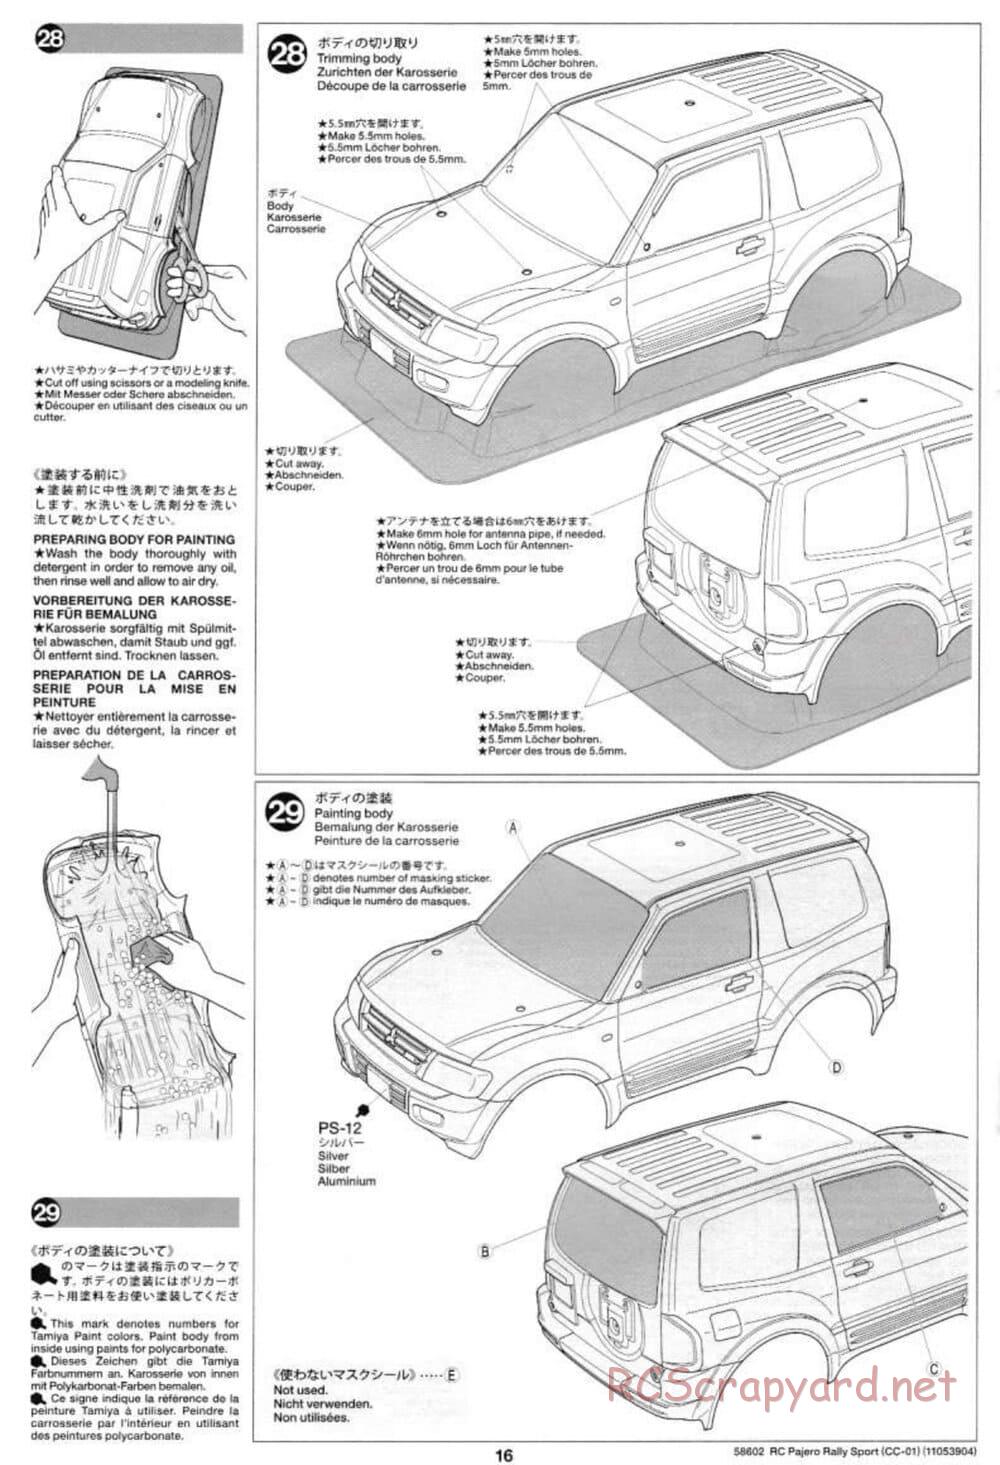 Tamiya - Mitsubishi Pajero Rally Sport - CC-01 Chassis - Manual - Page 16